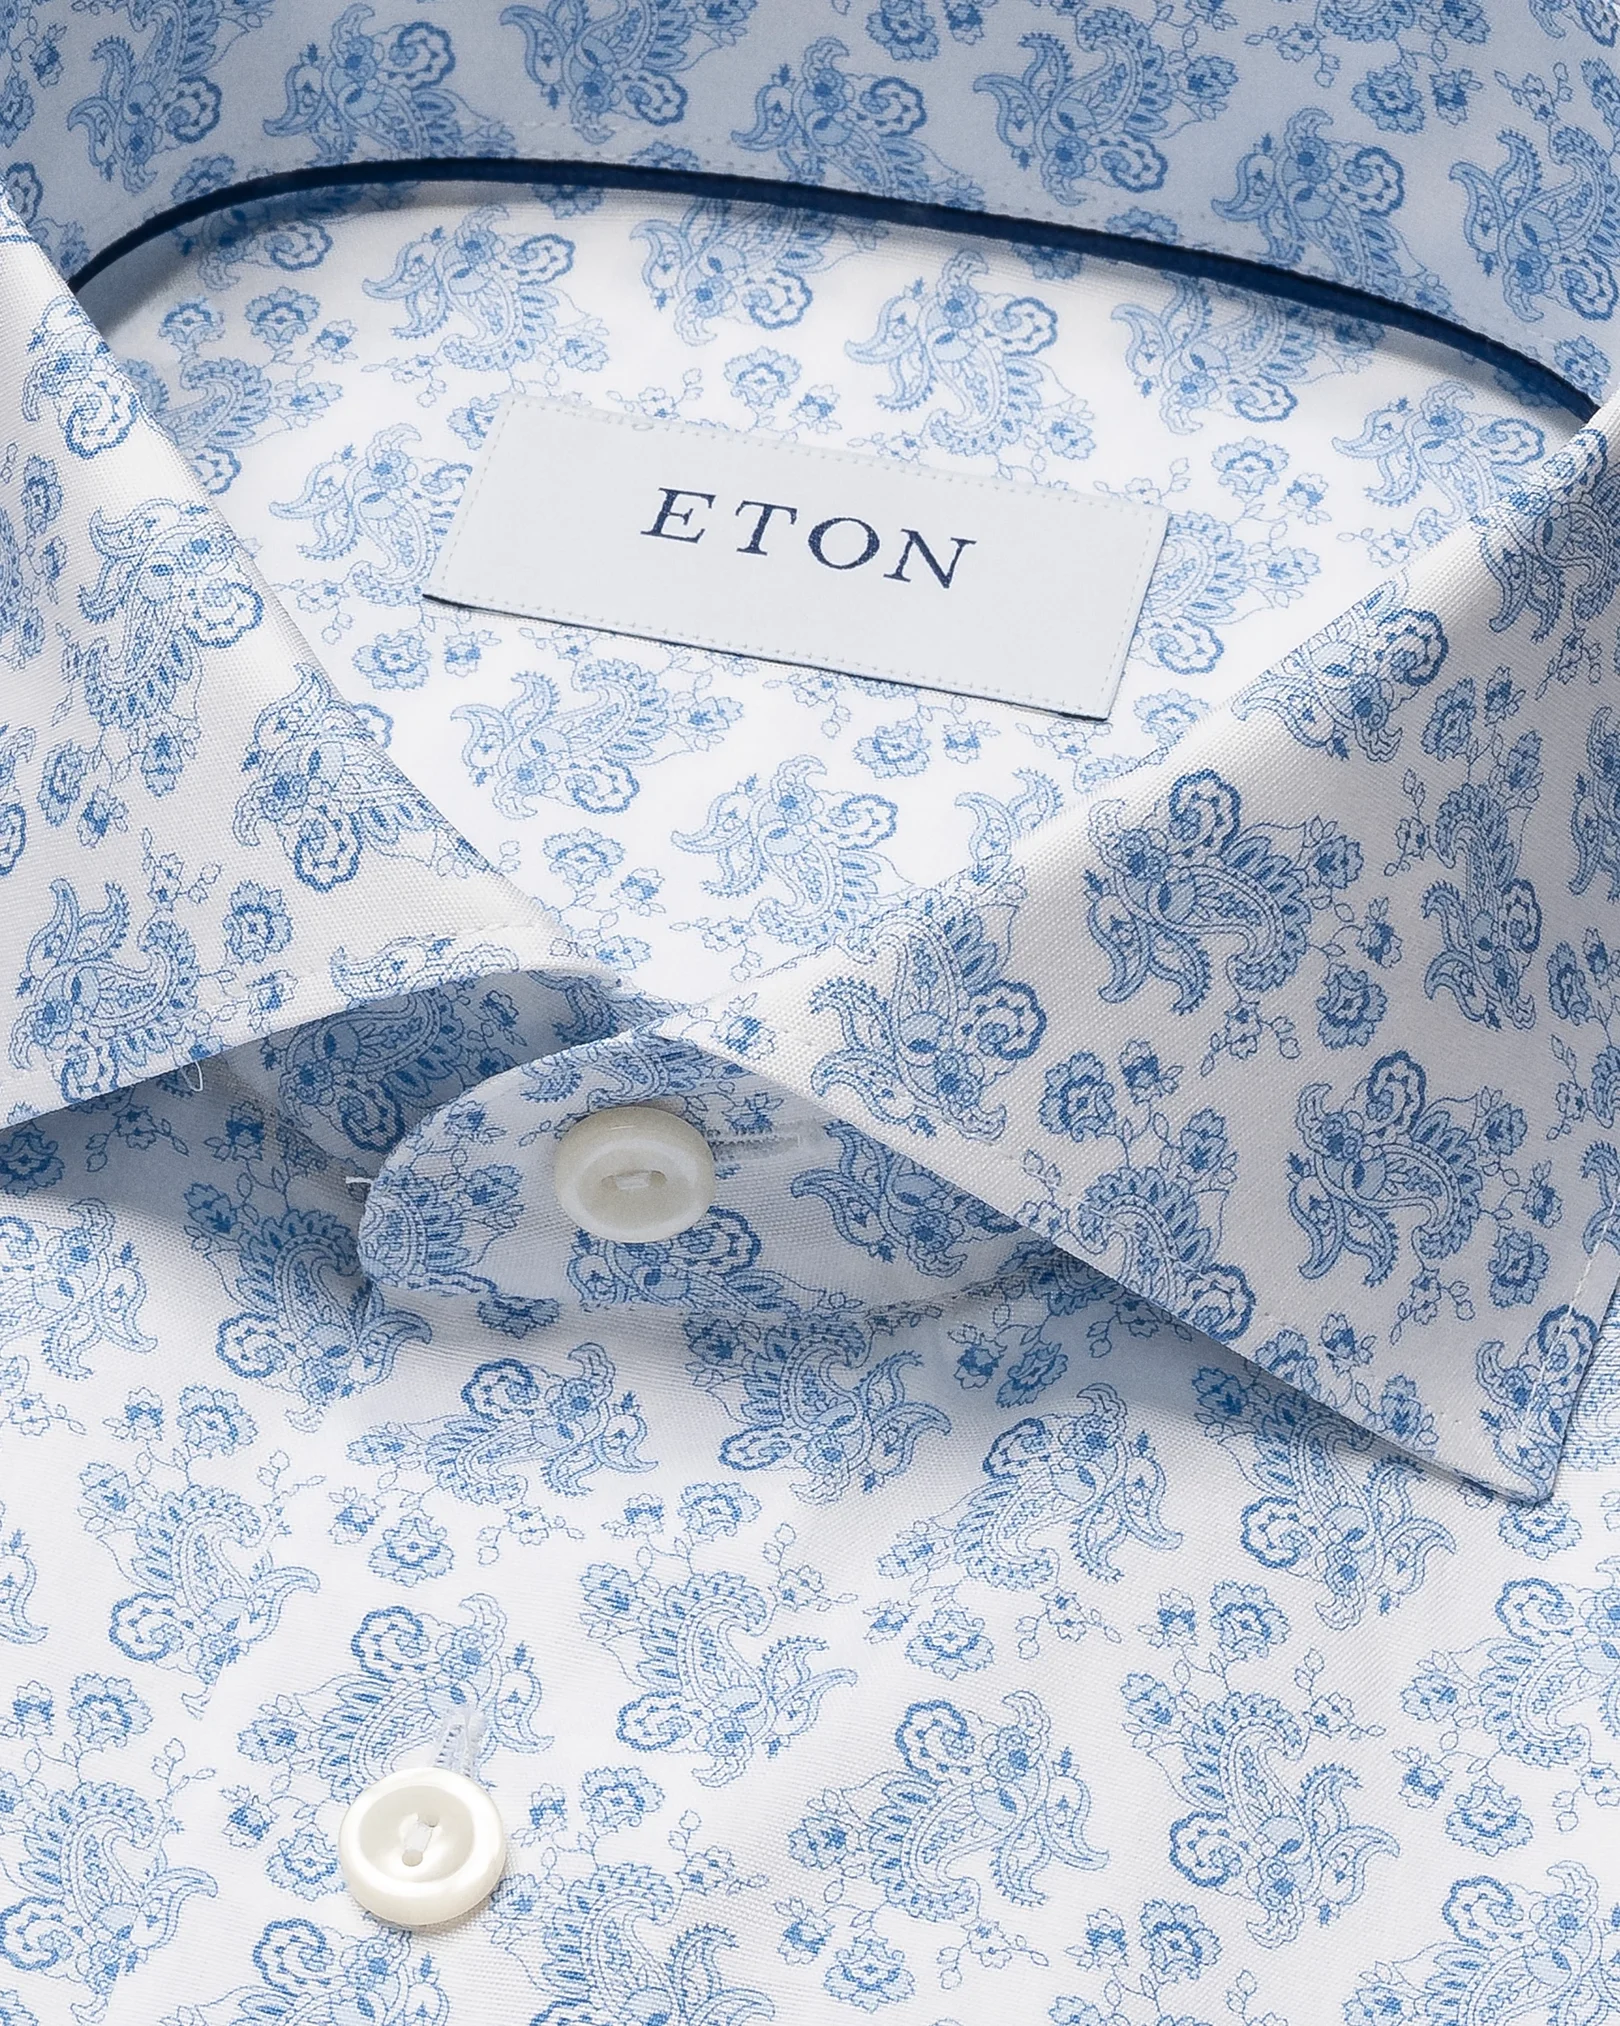 Eton - mid blue paisley poplin shirt